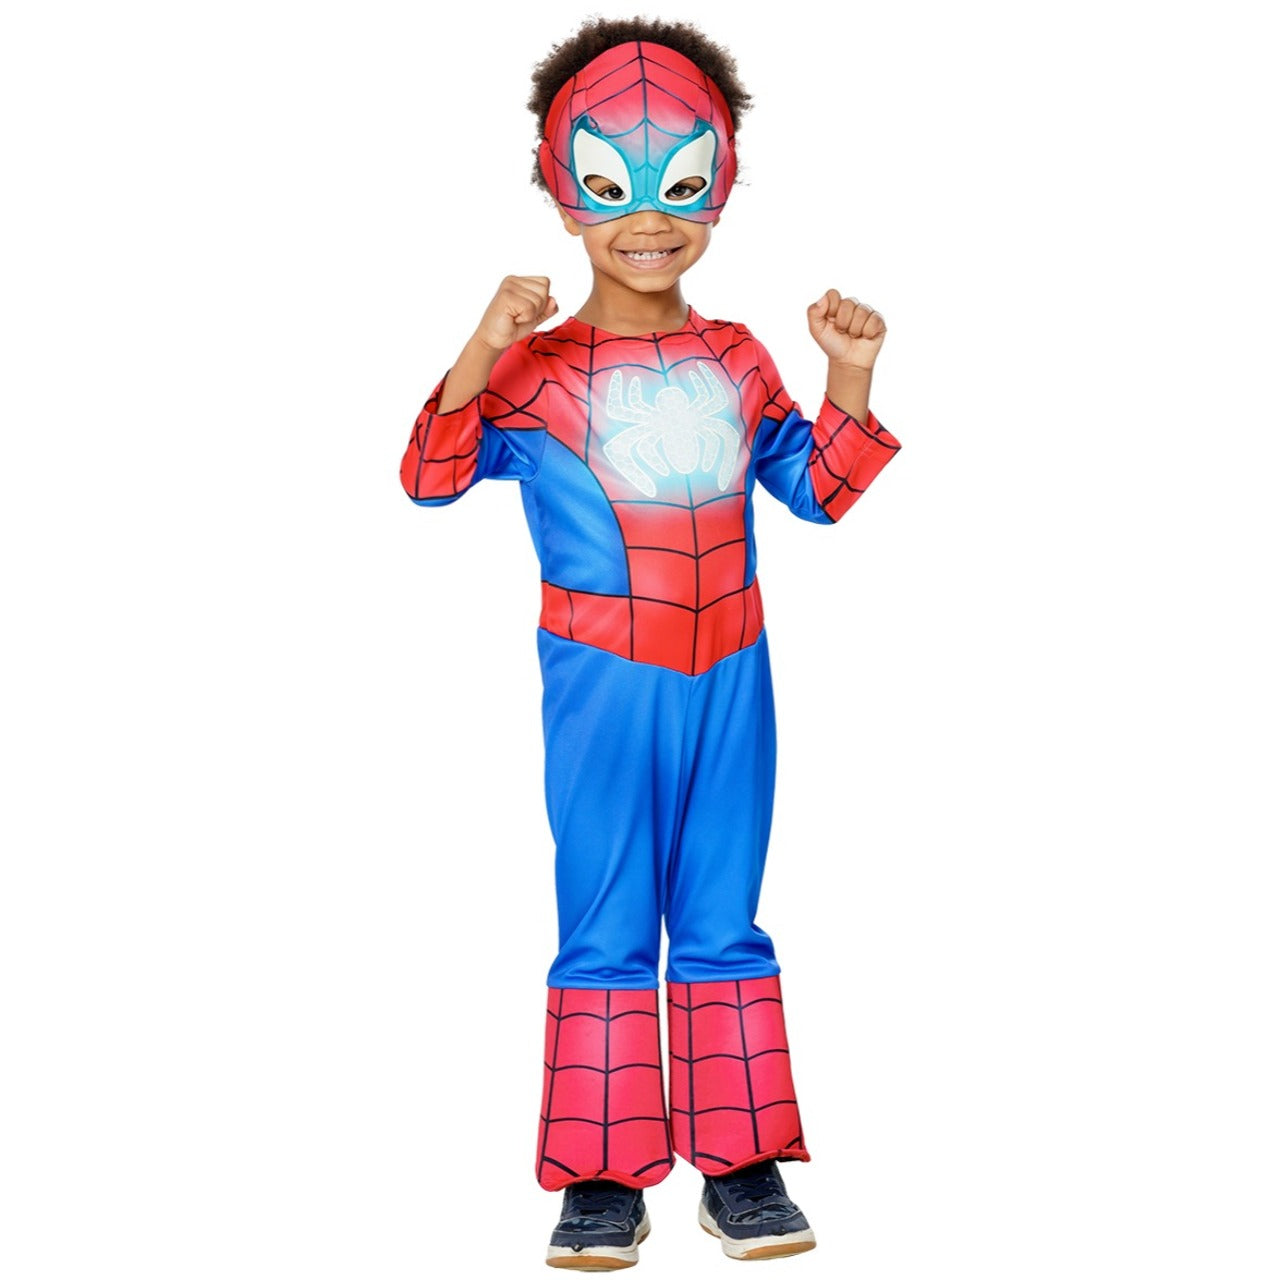 Acquista online costume da Spiderman Spidey™ infantile